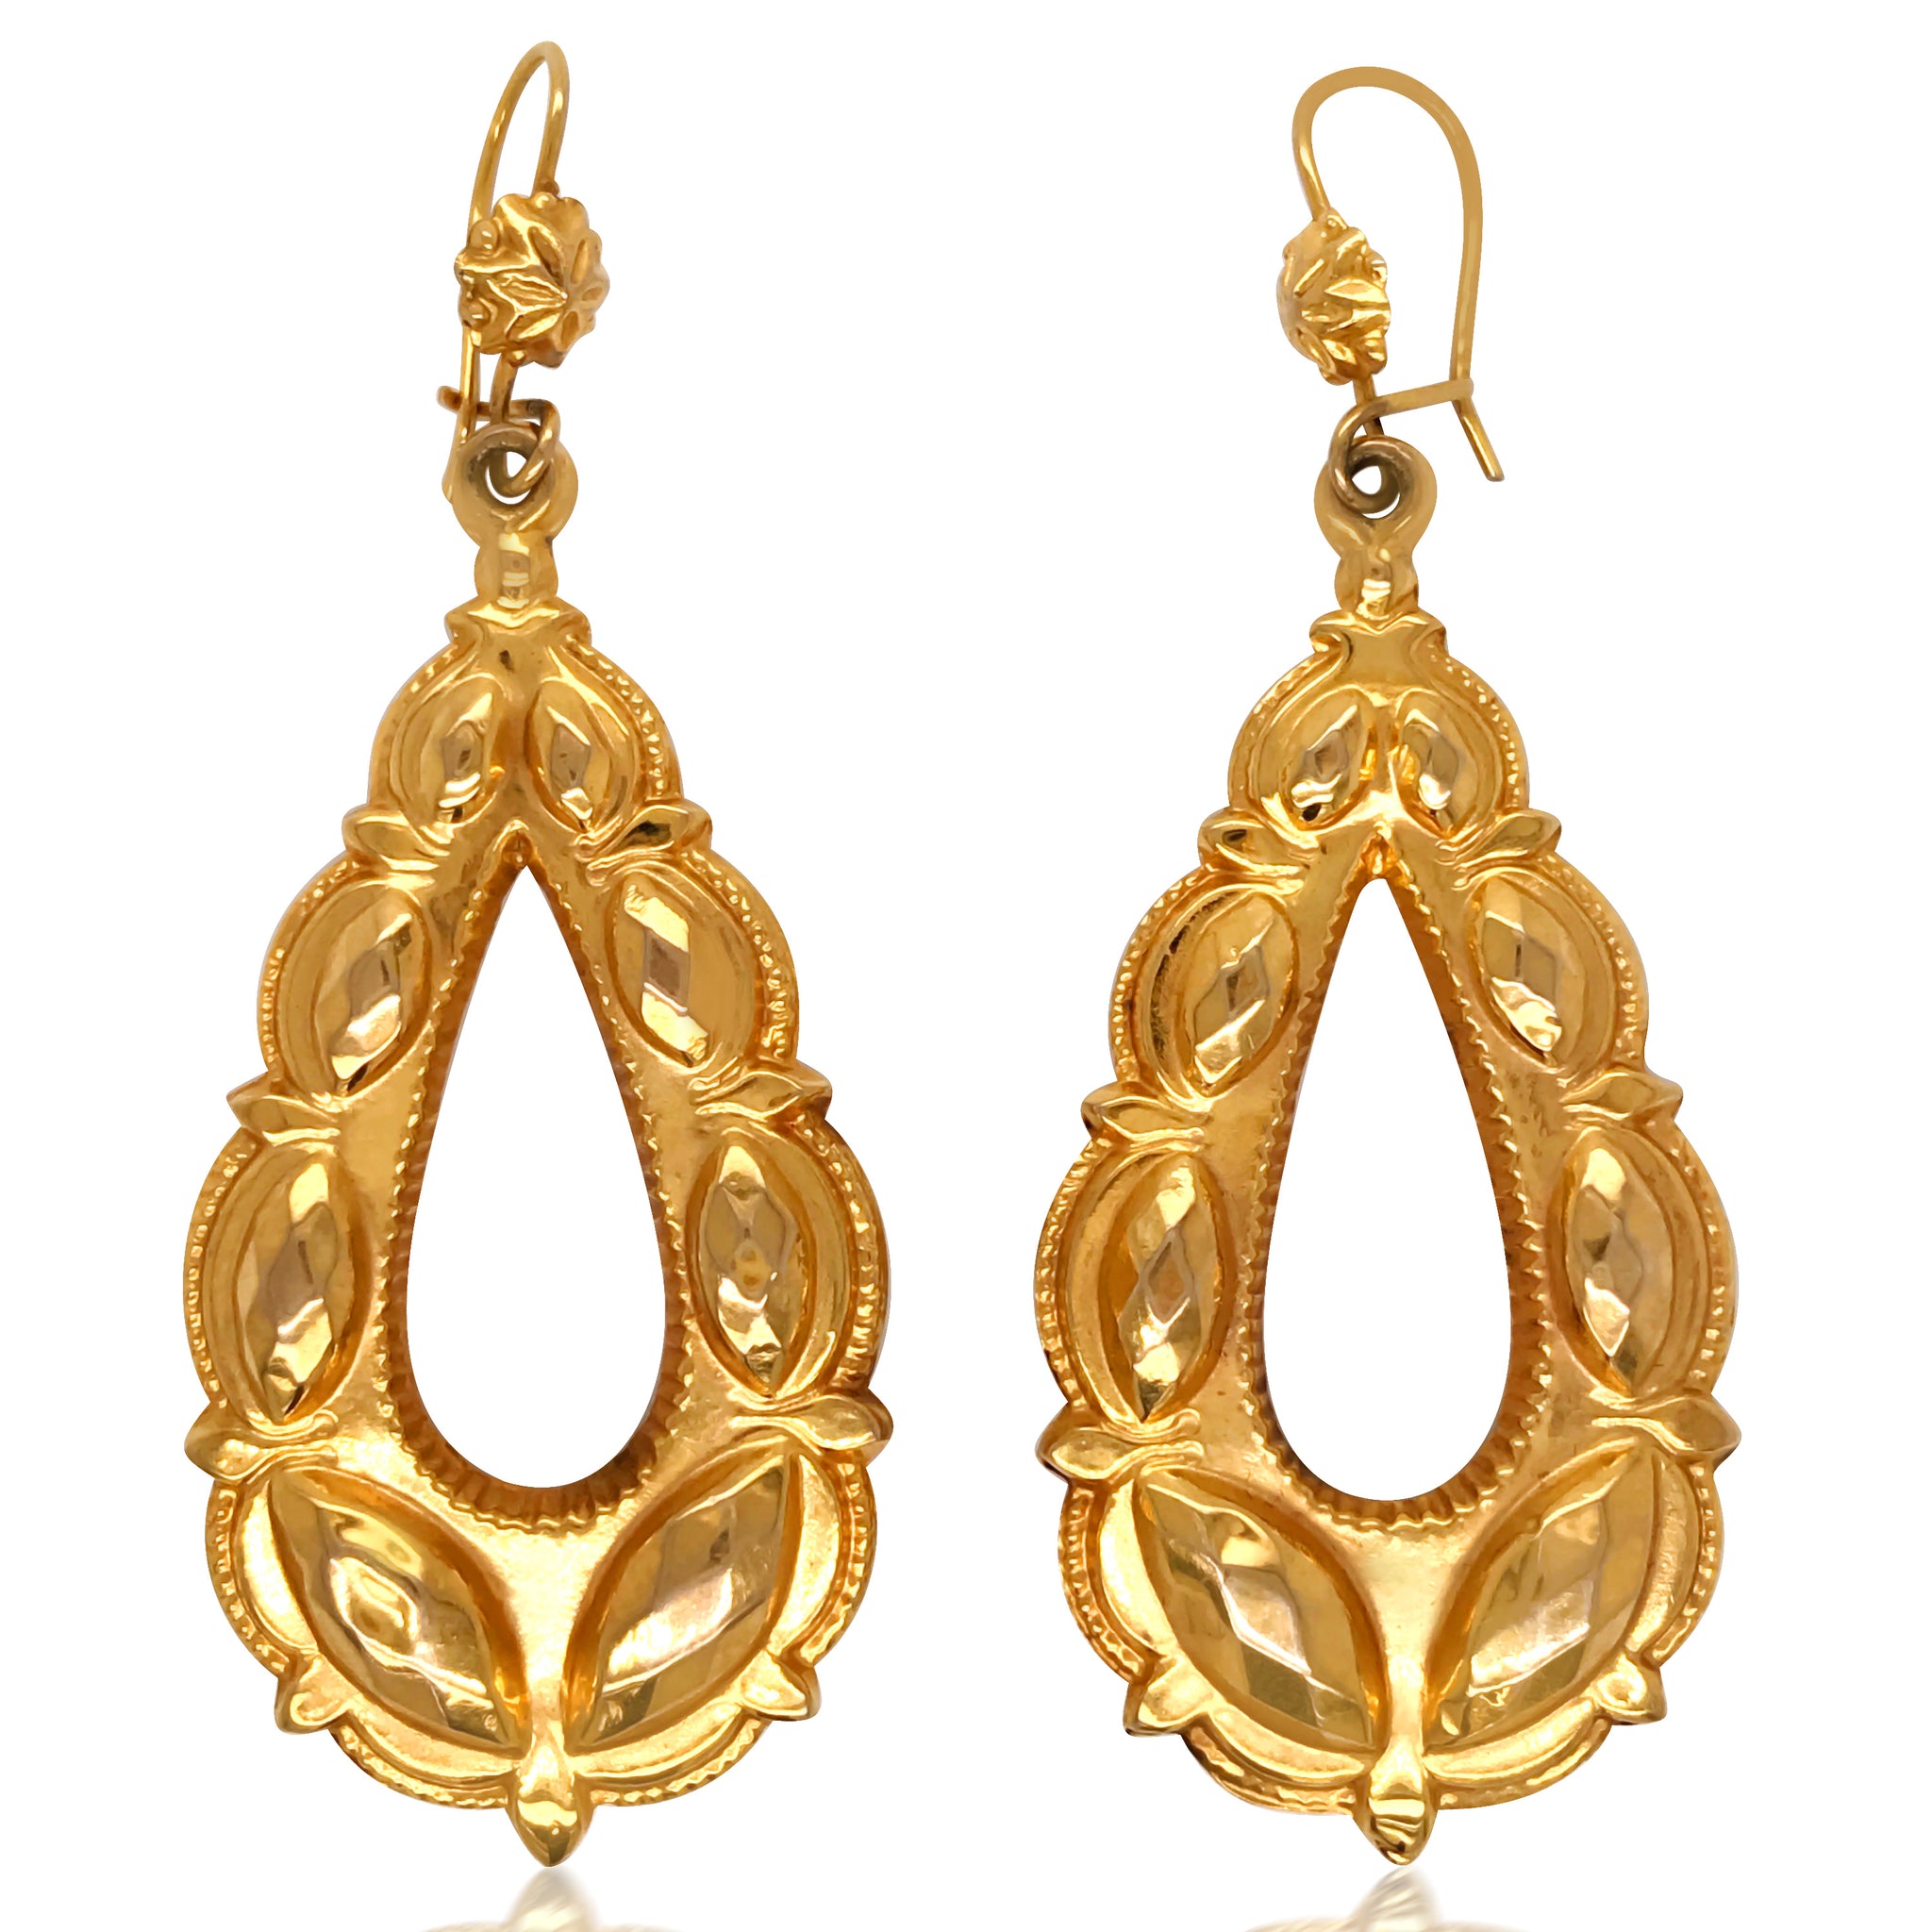 Antique Gold Earrings - Lueur Jewelry